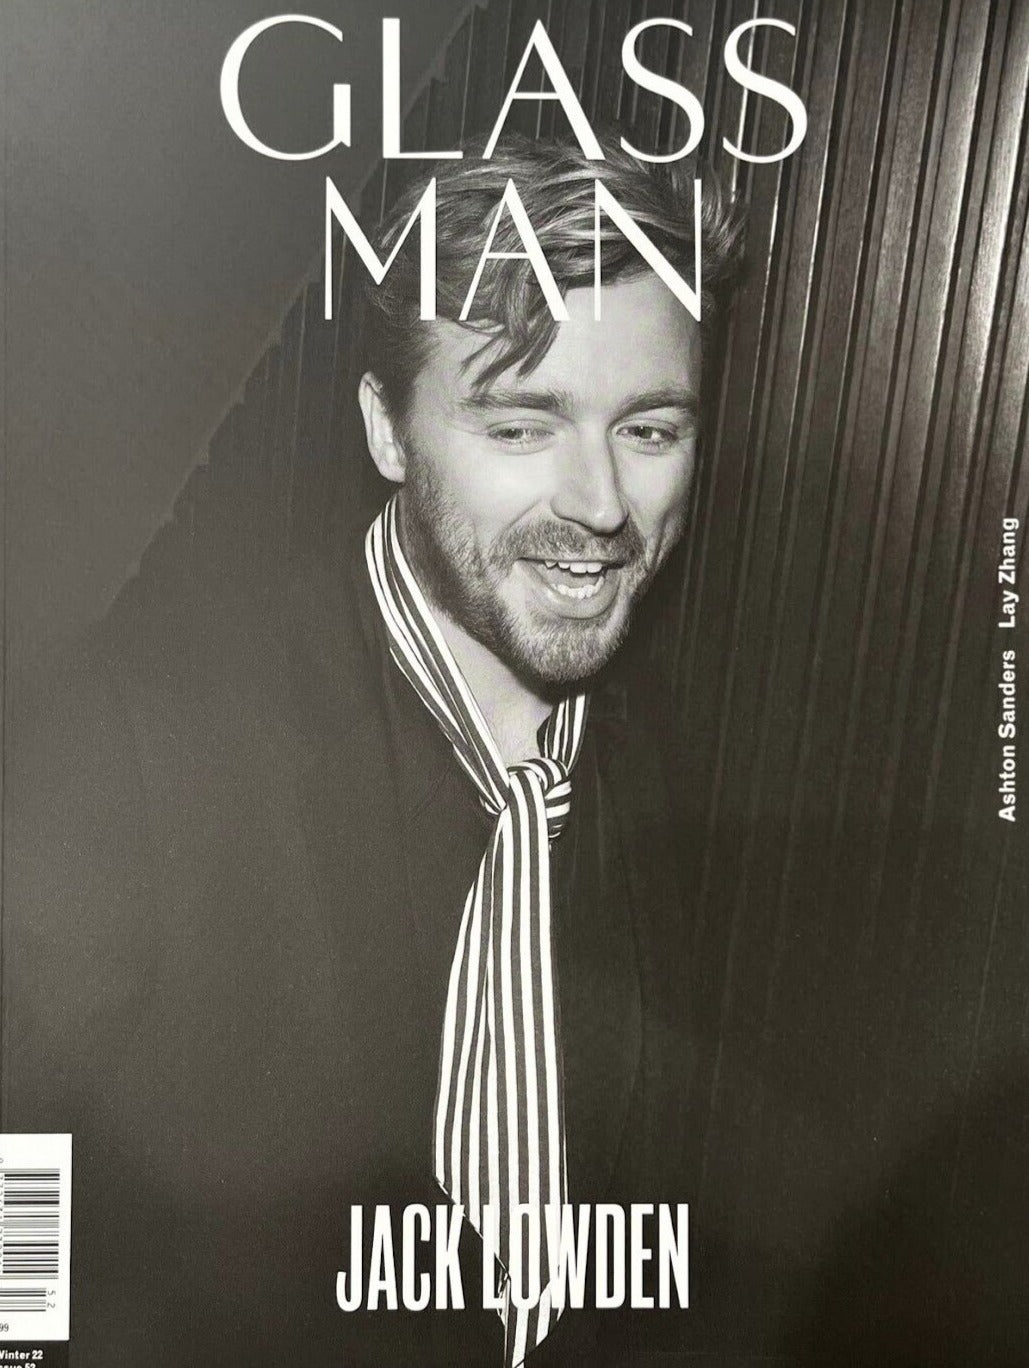 Glass Man Magazine